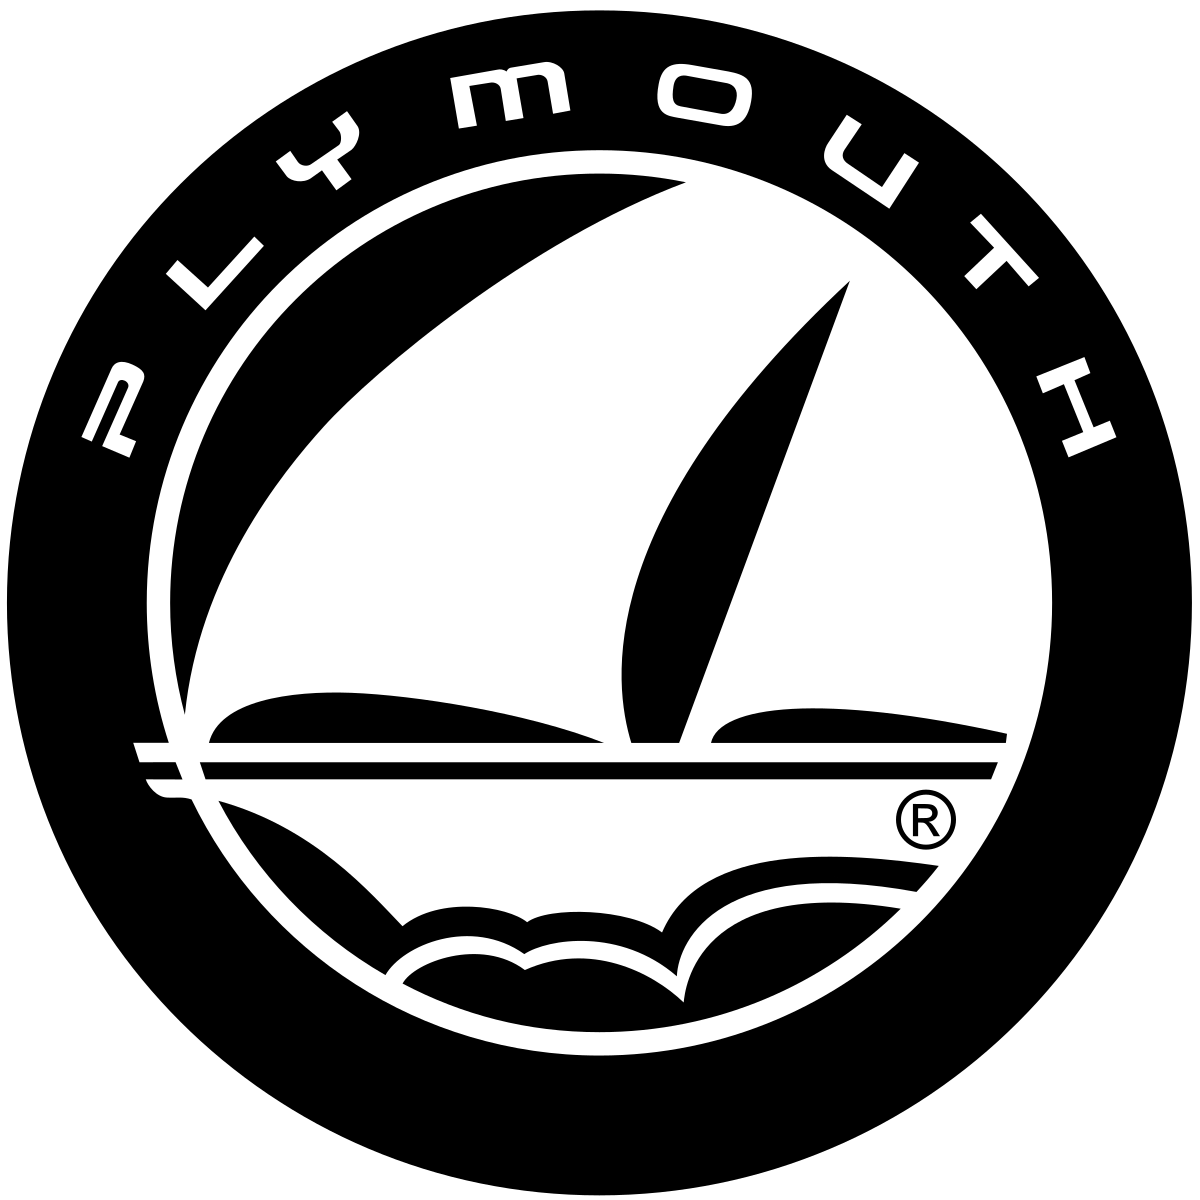 Plymouth_logo.svg